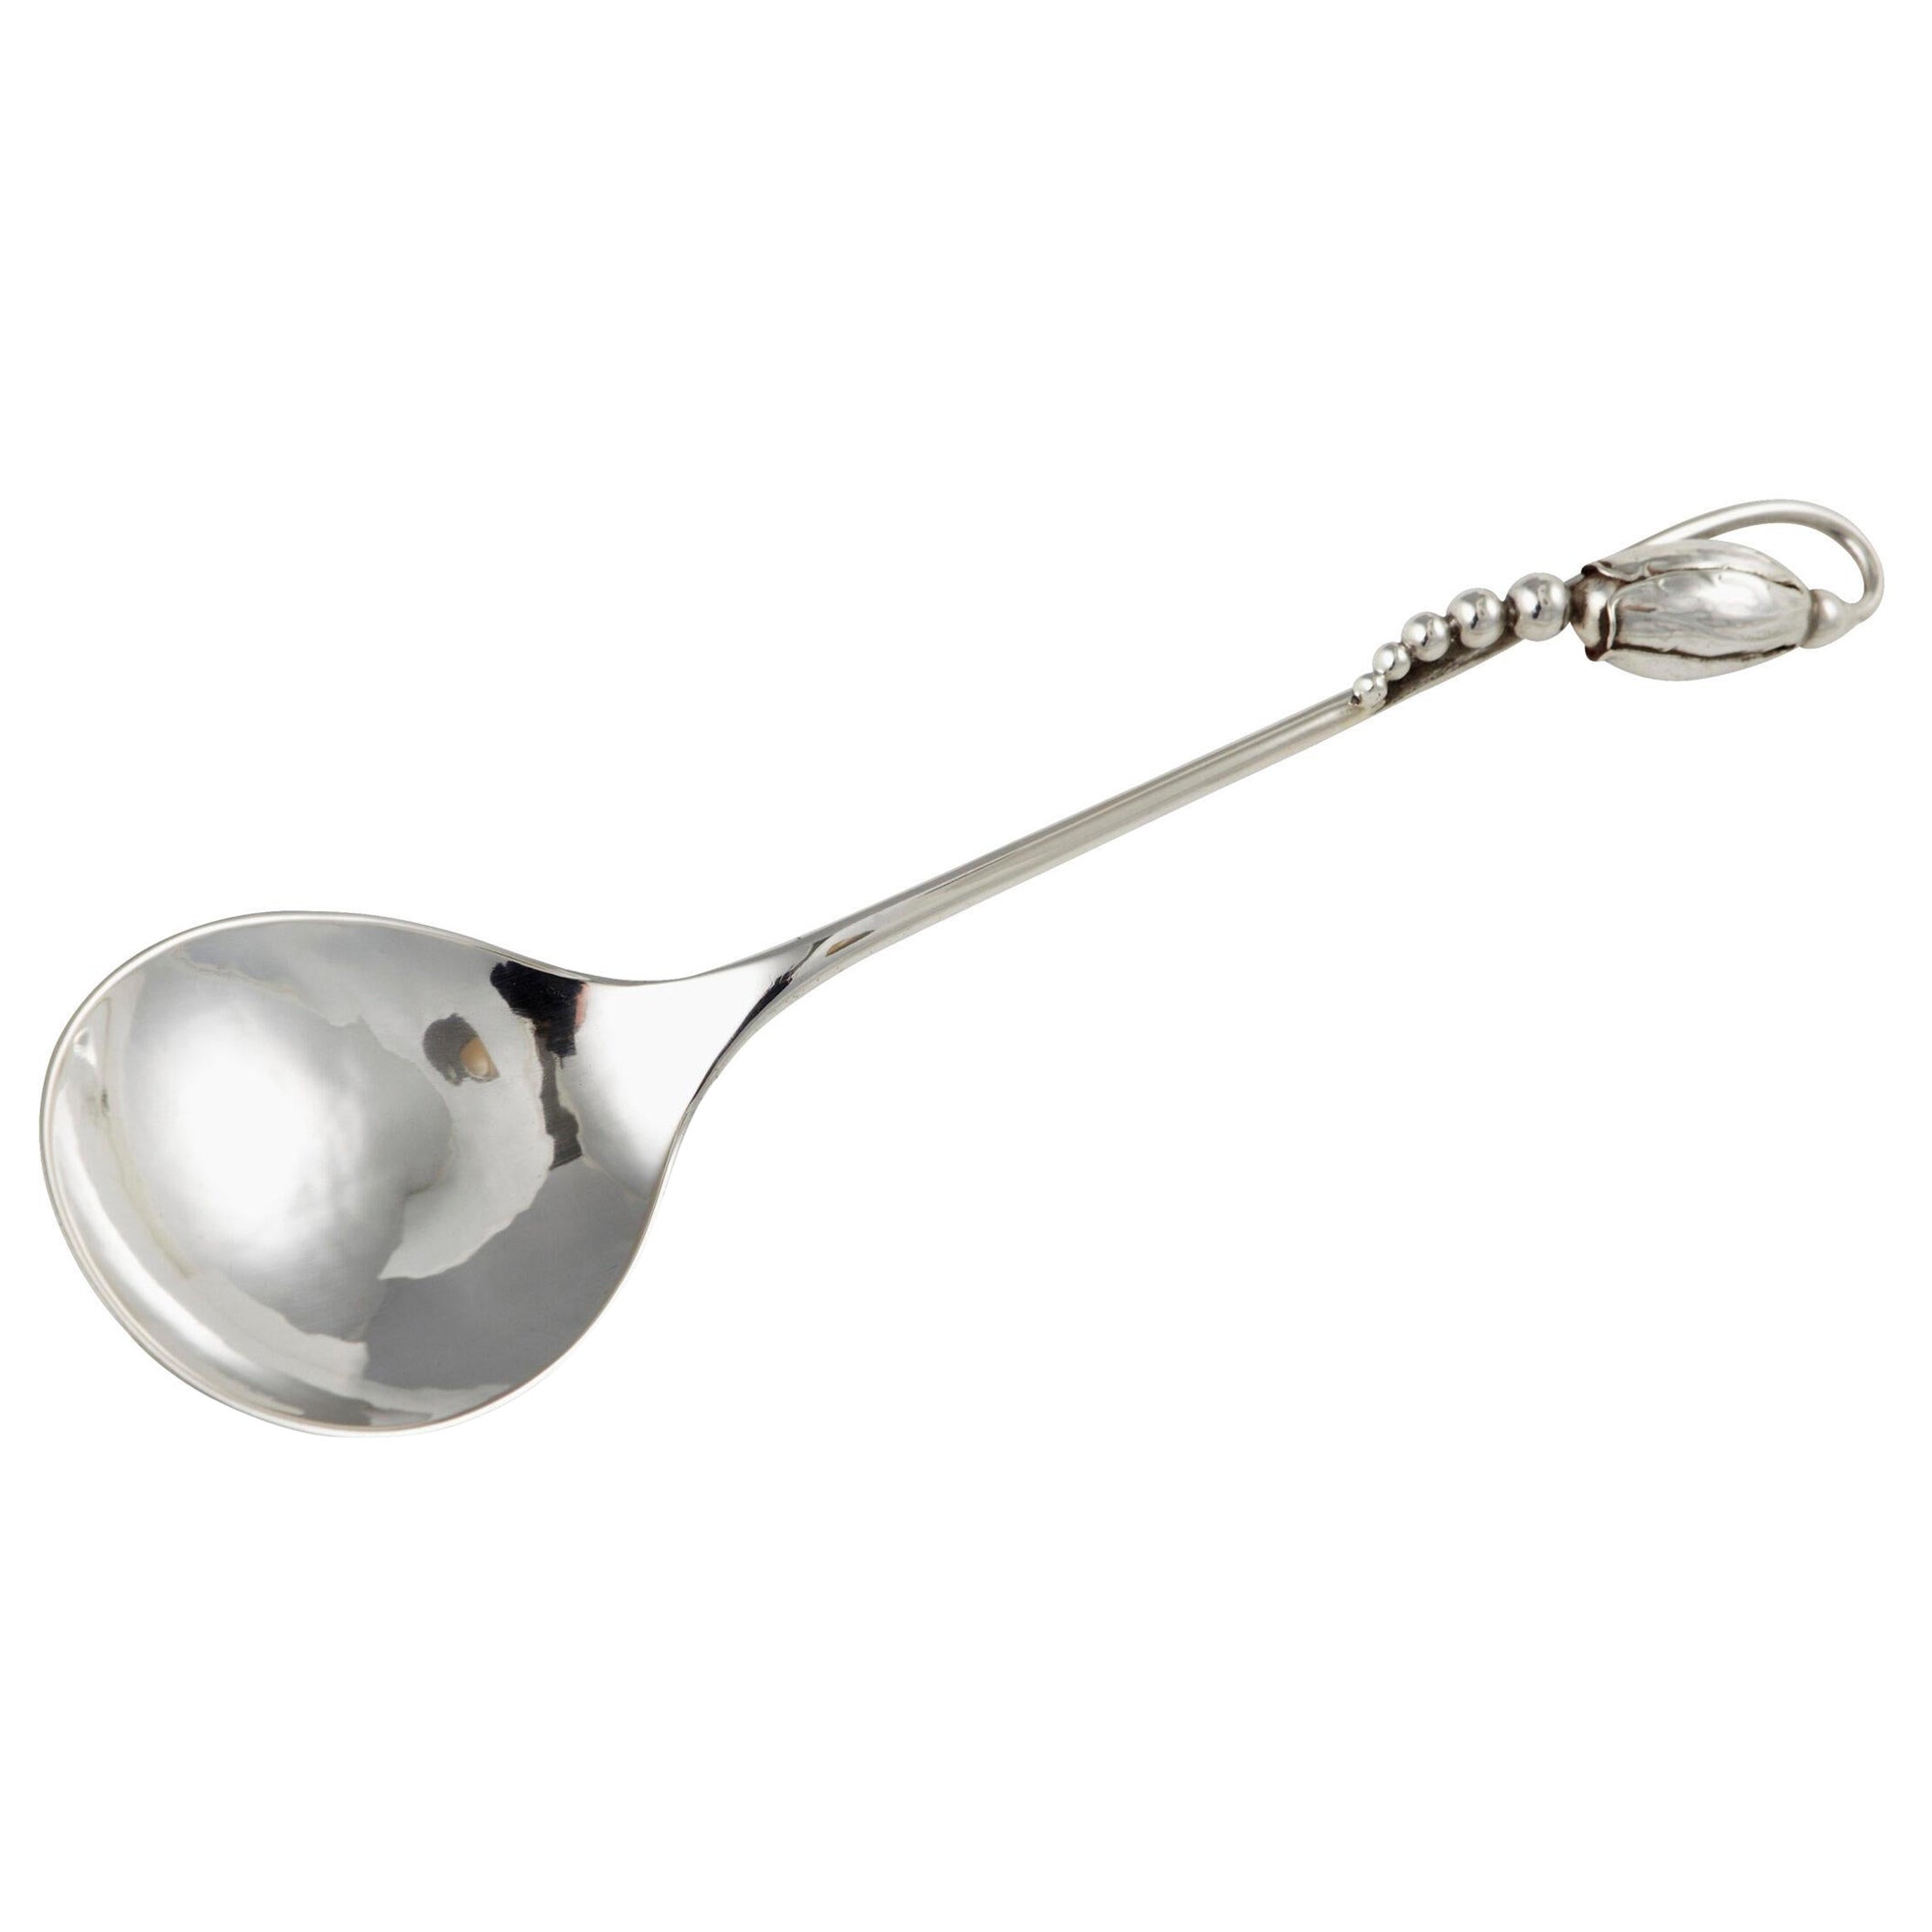 Georg Jensen Blossom Sterling Silver Jam Spoon 163 For Sale